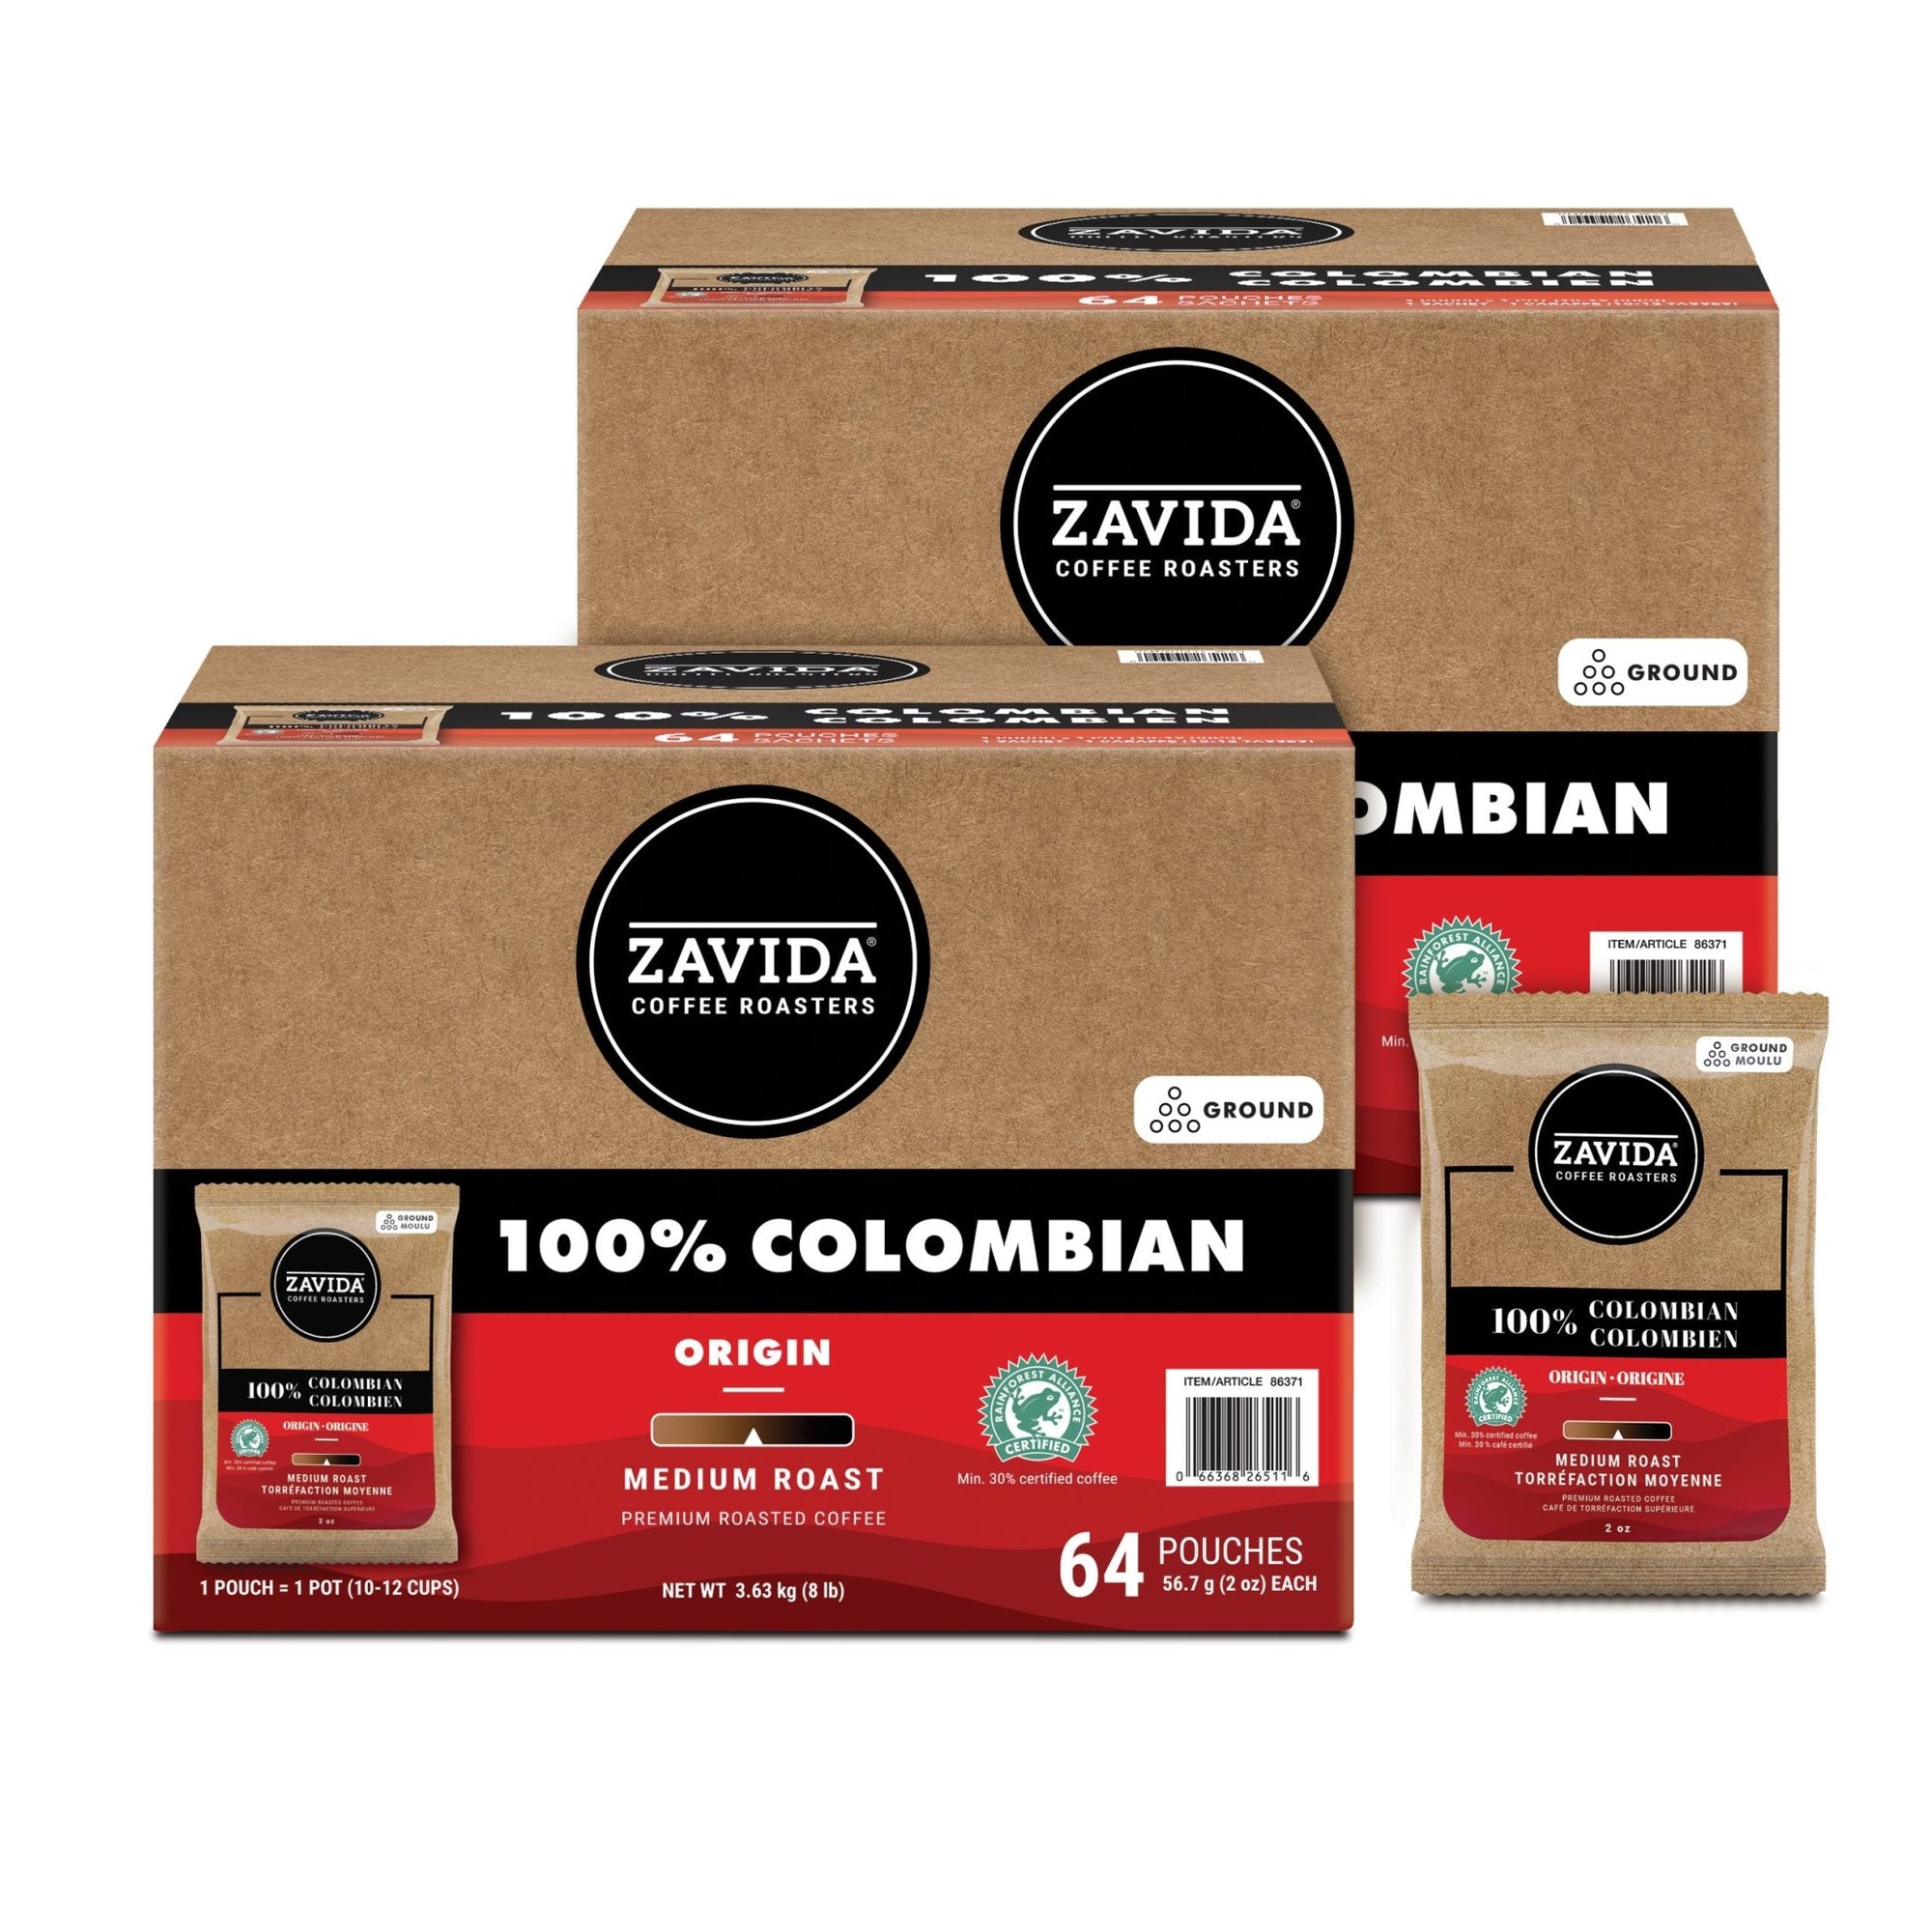 100% Colombian Coffee 64 Pouches - Zavida Coffee